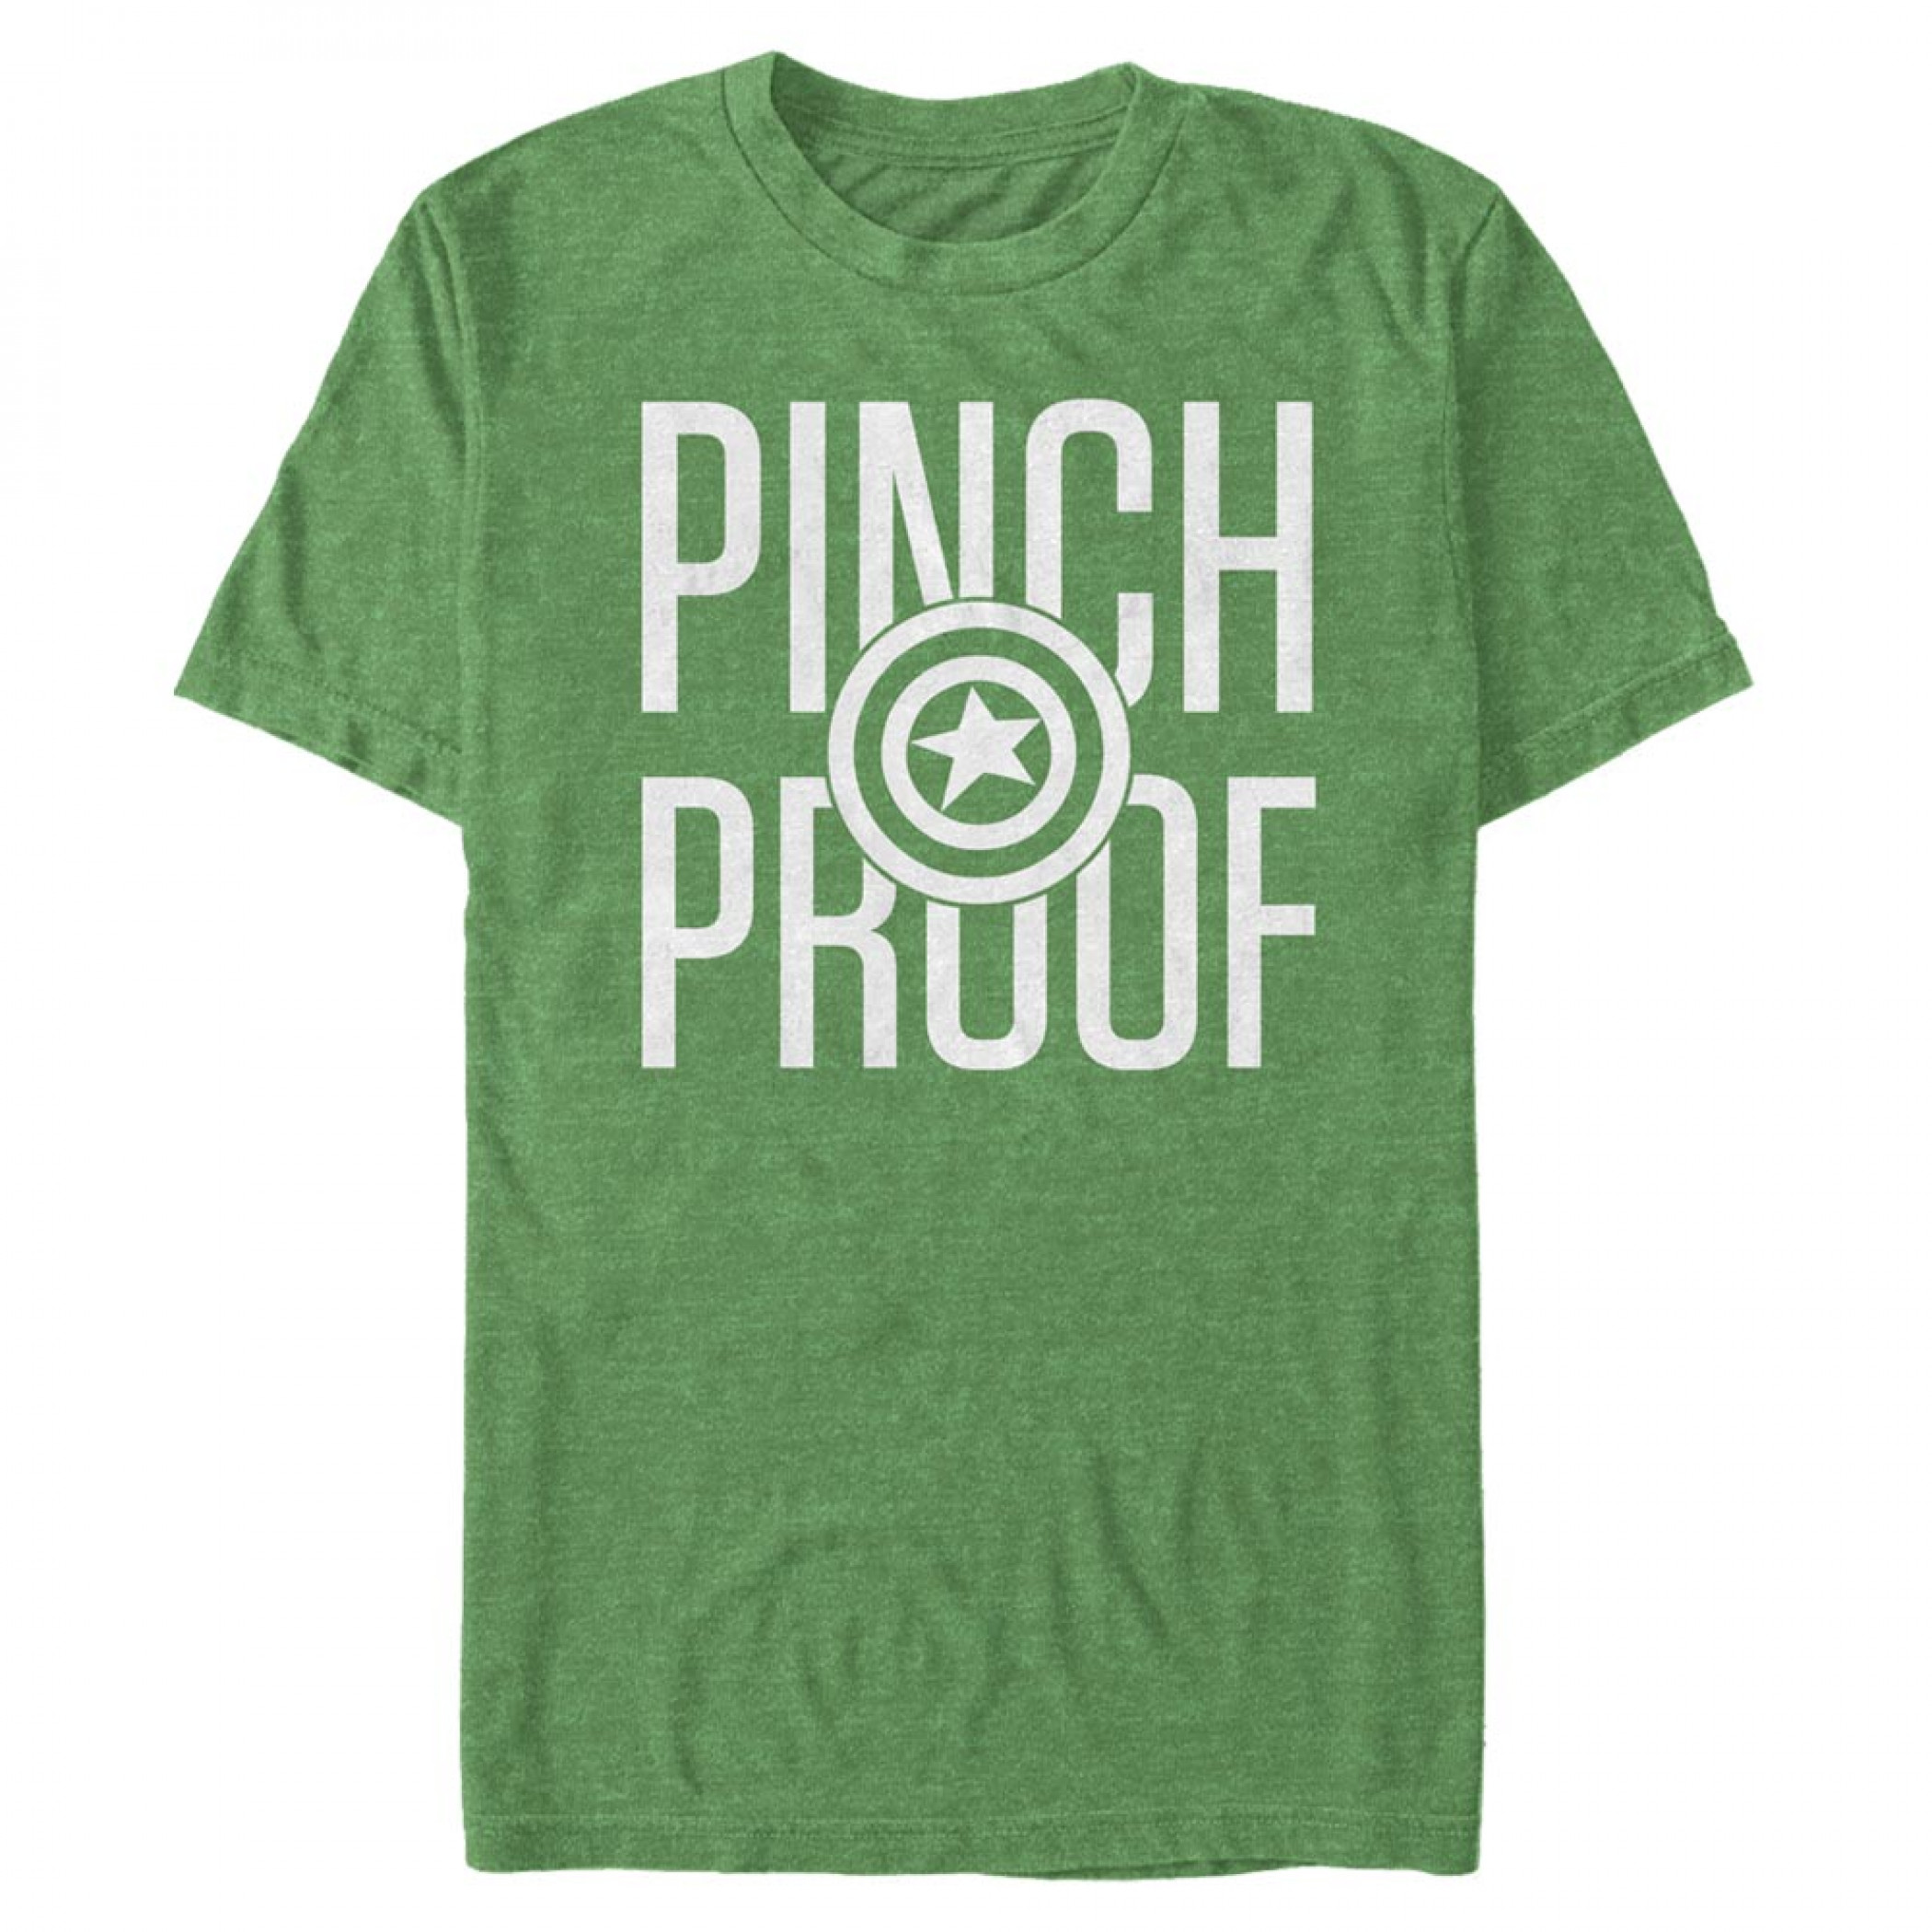 Captain America Pinch Proof Green T-Shirt